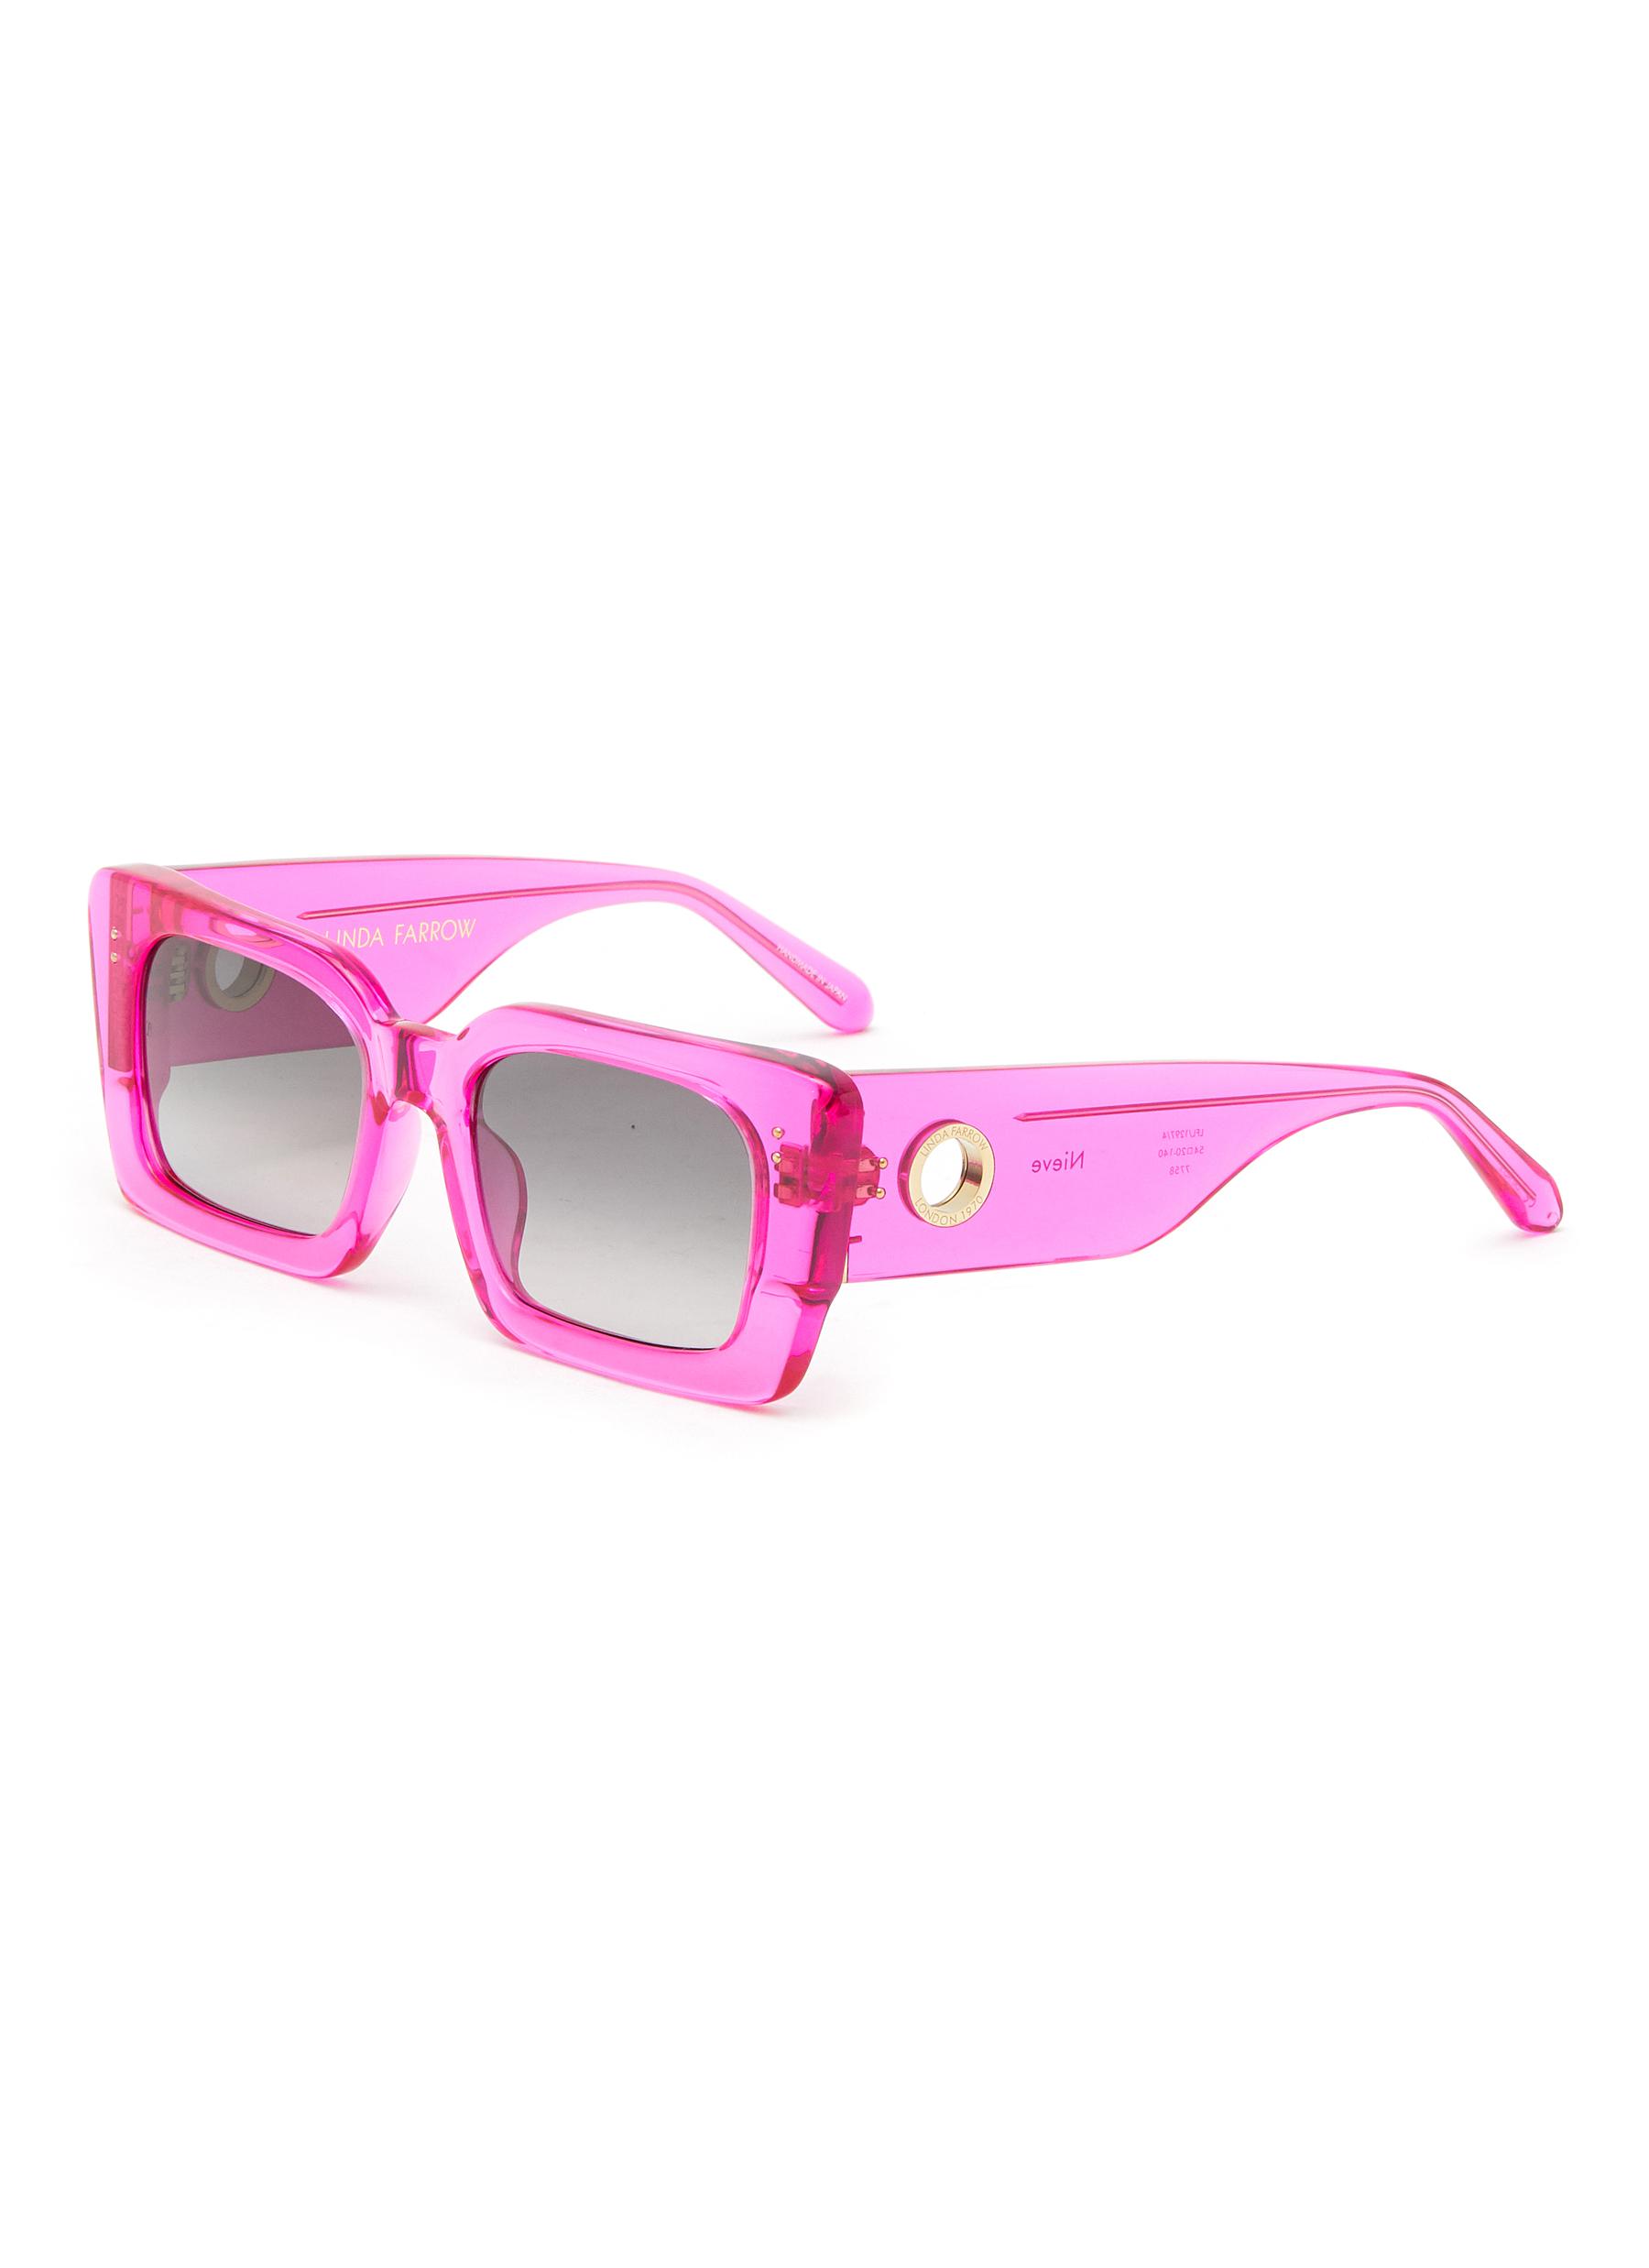 LINDA FARROW 'Nieve' Thick Acetate Frame Rectangular Sunglasses